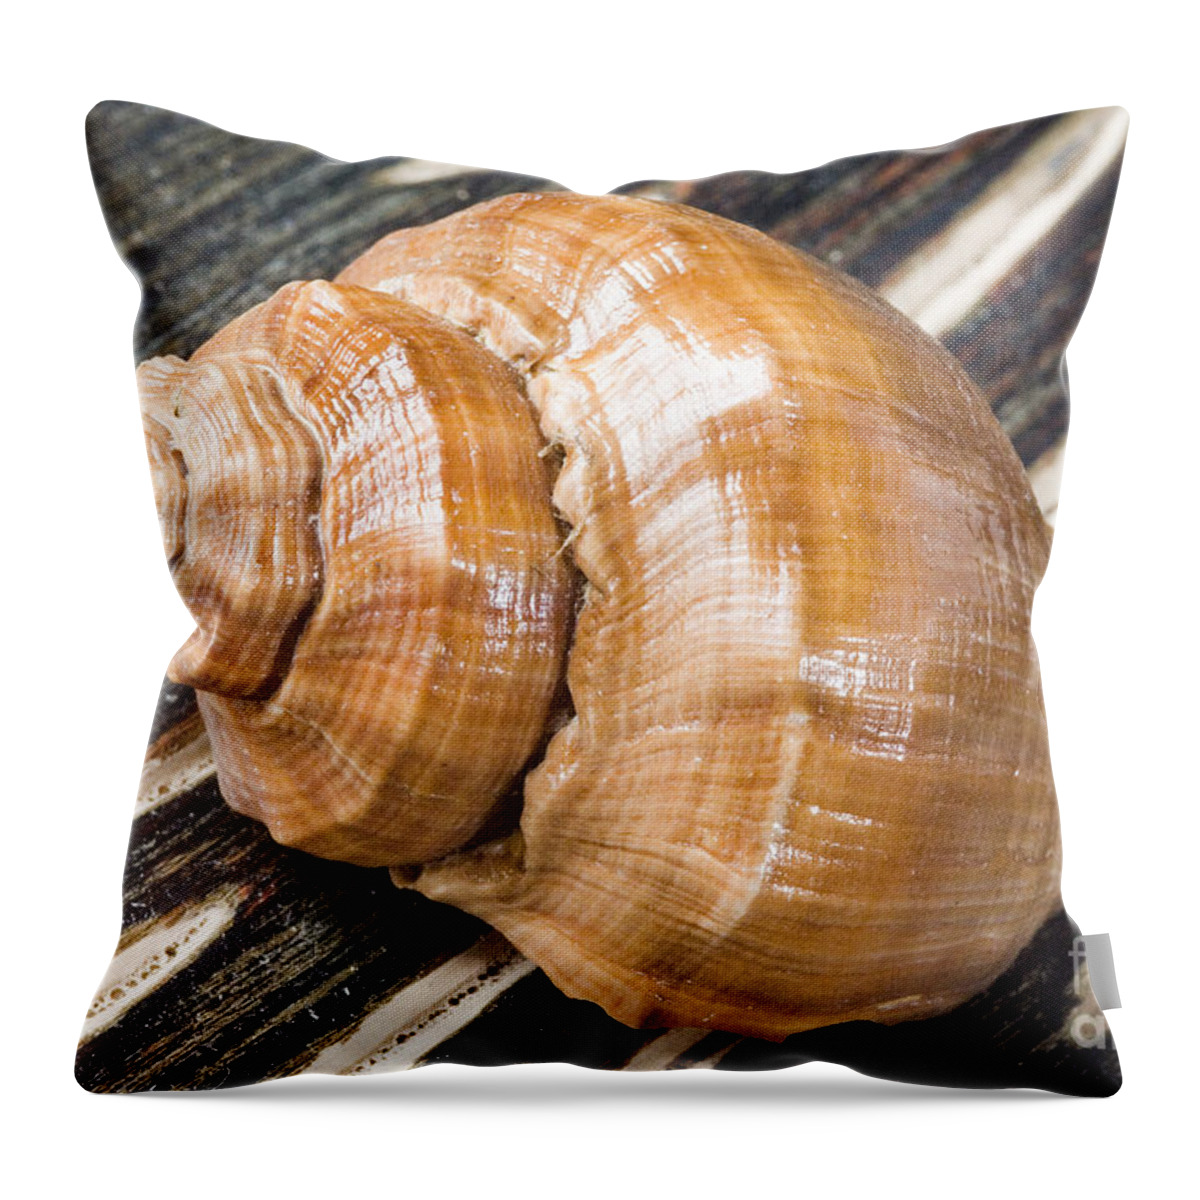 Beach Art Throw Pillow featuring the photograph Seashell by Bill Brennan - Printscapes